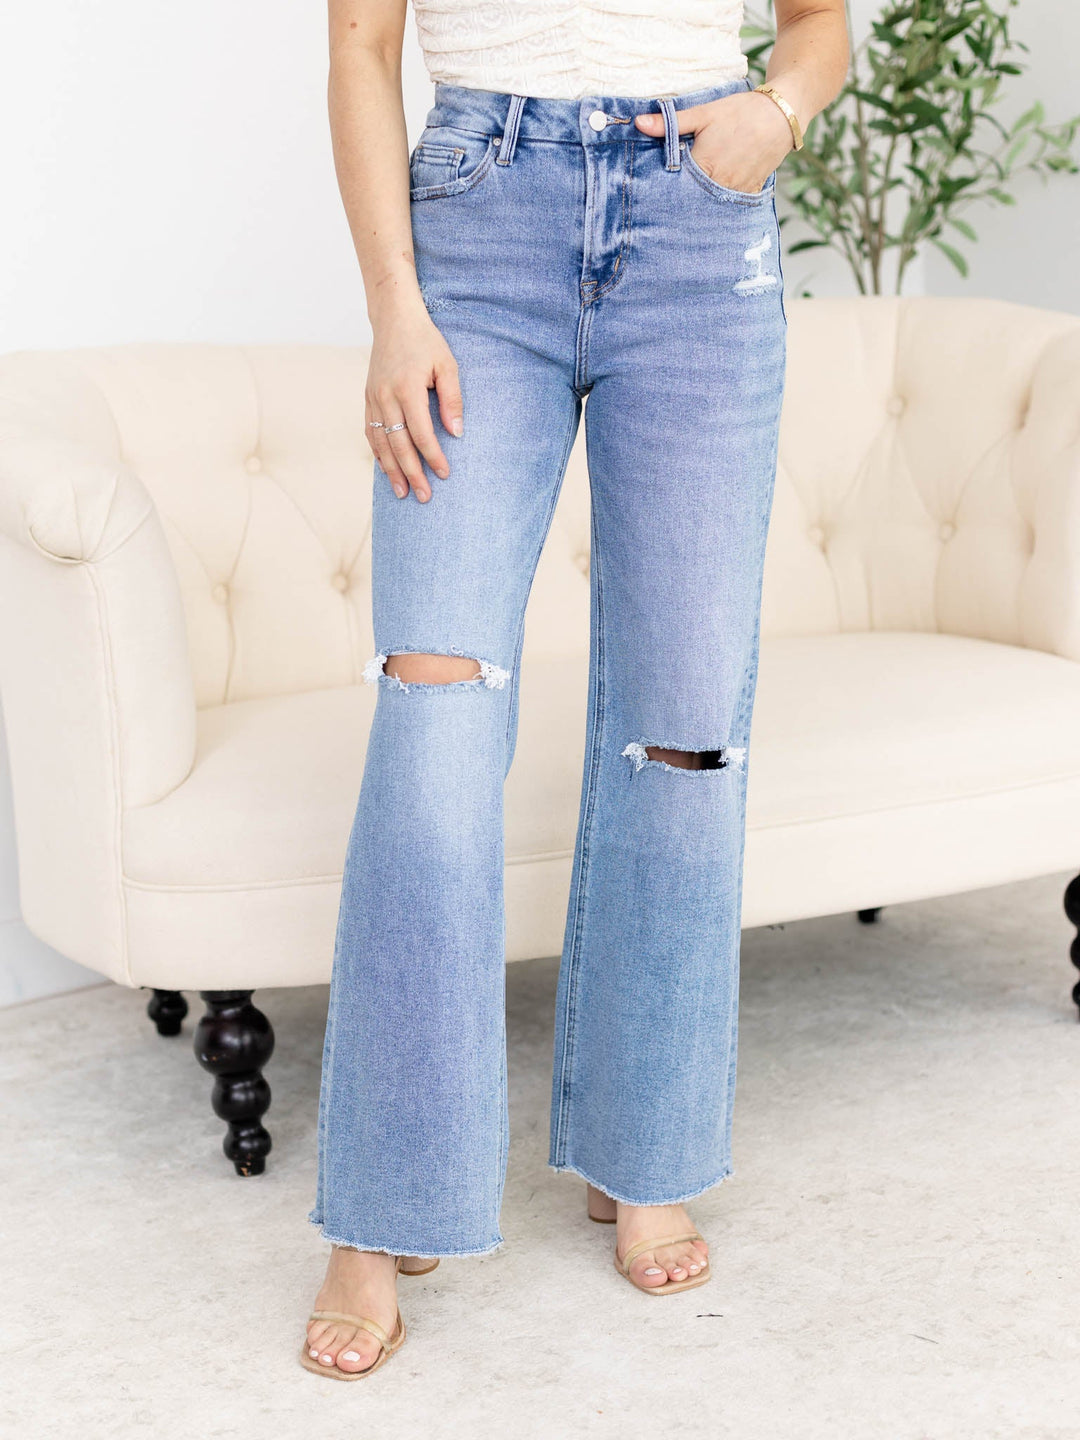 Judy Blue® Ultra High Rise Super Flare Jean - Women's Jeans in Printed